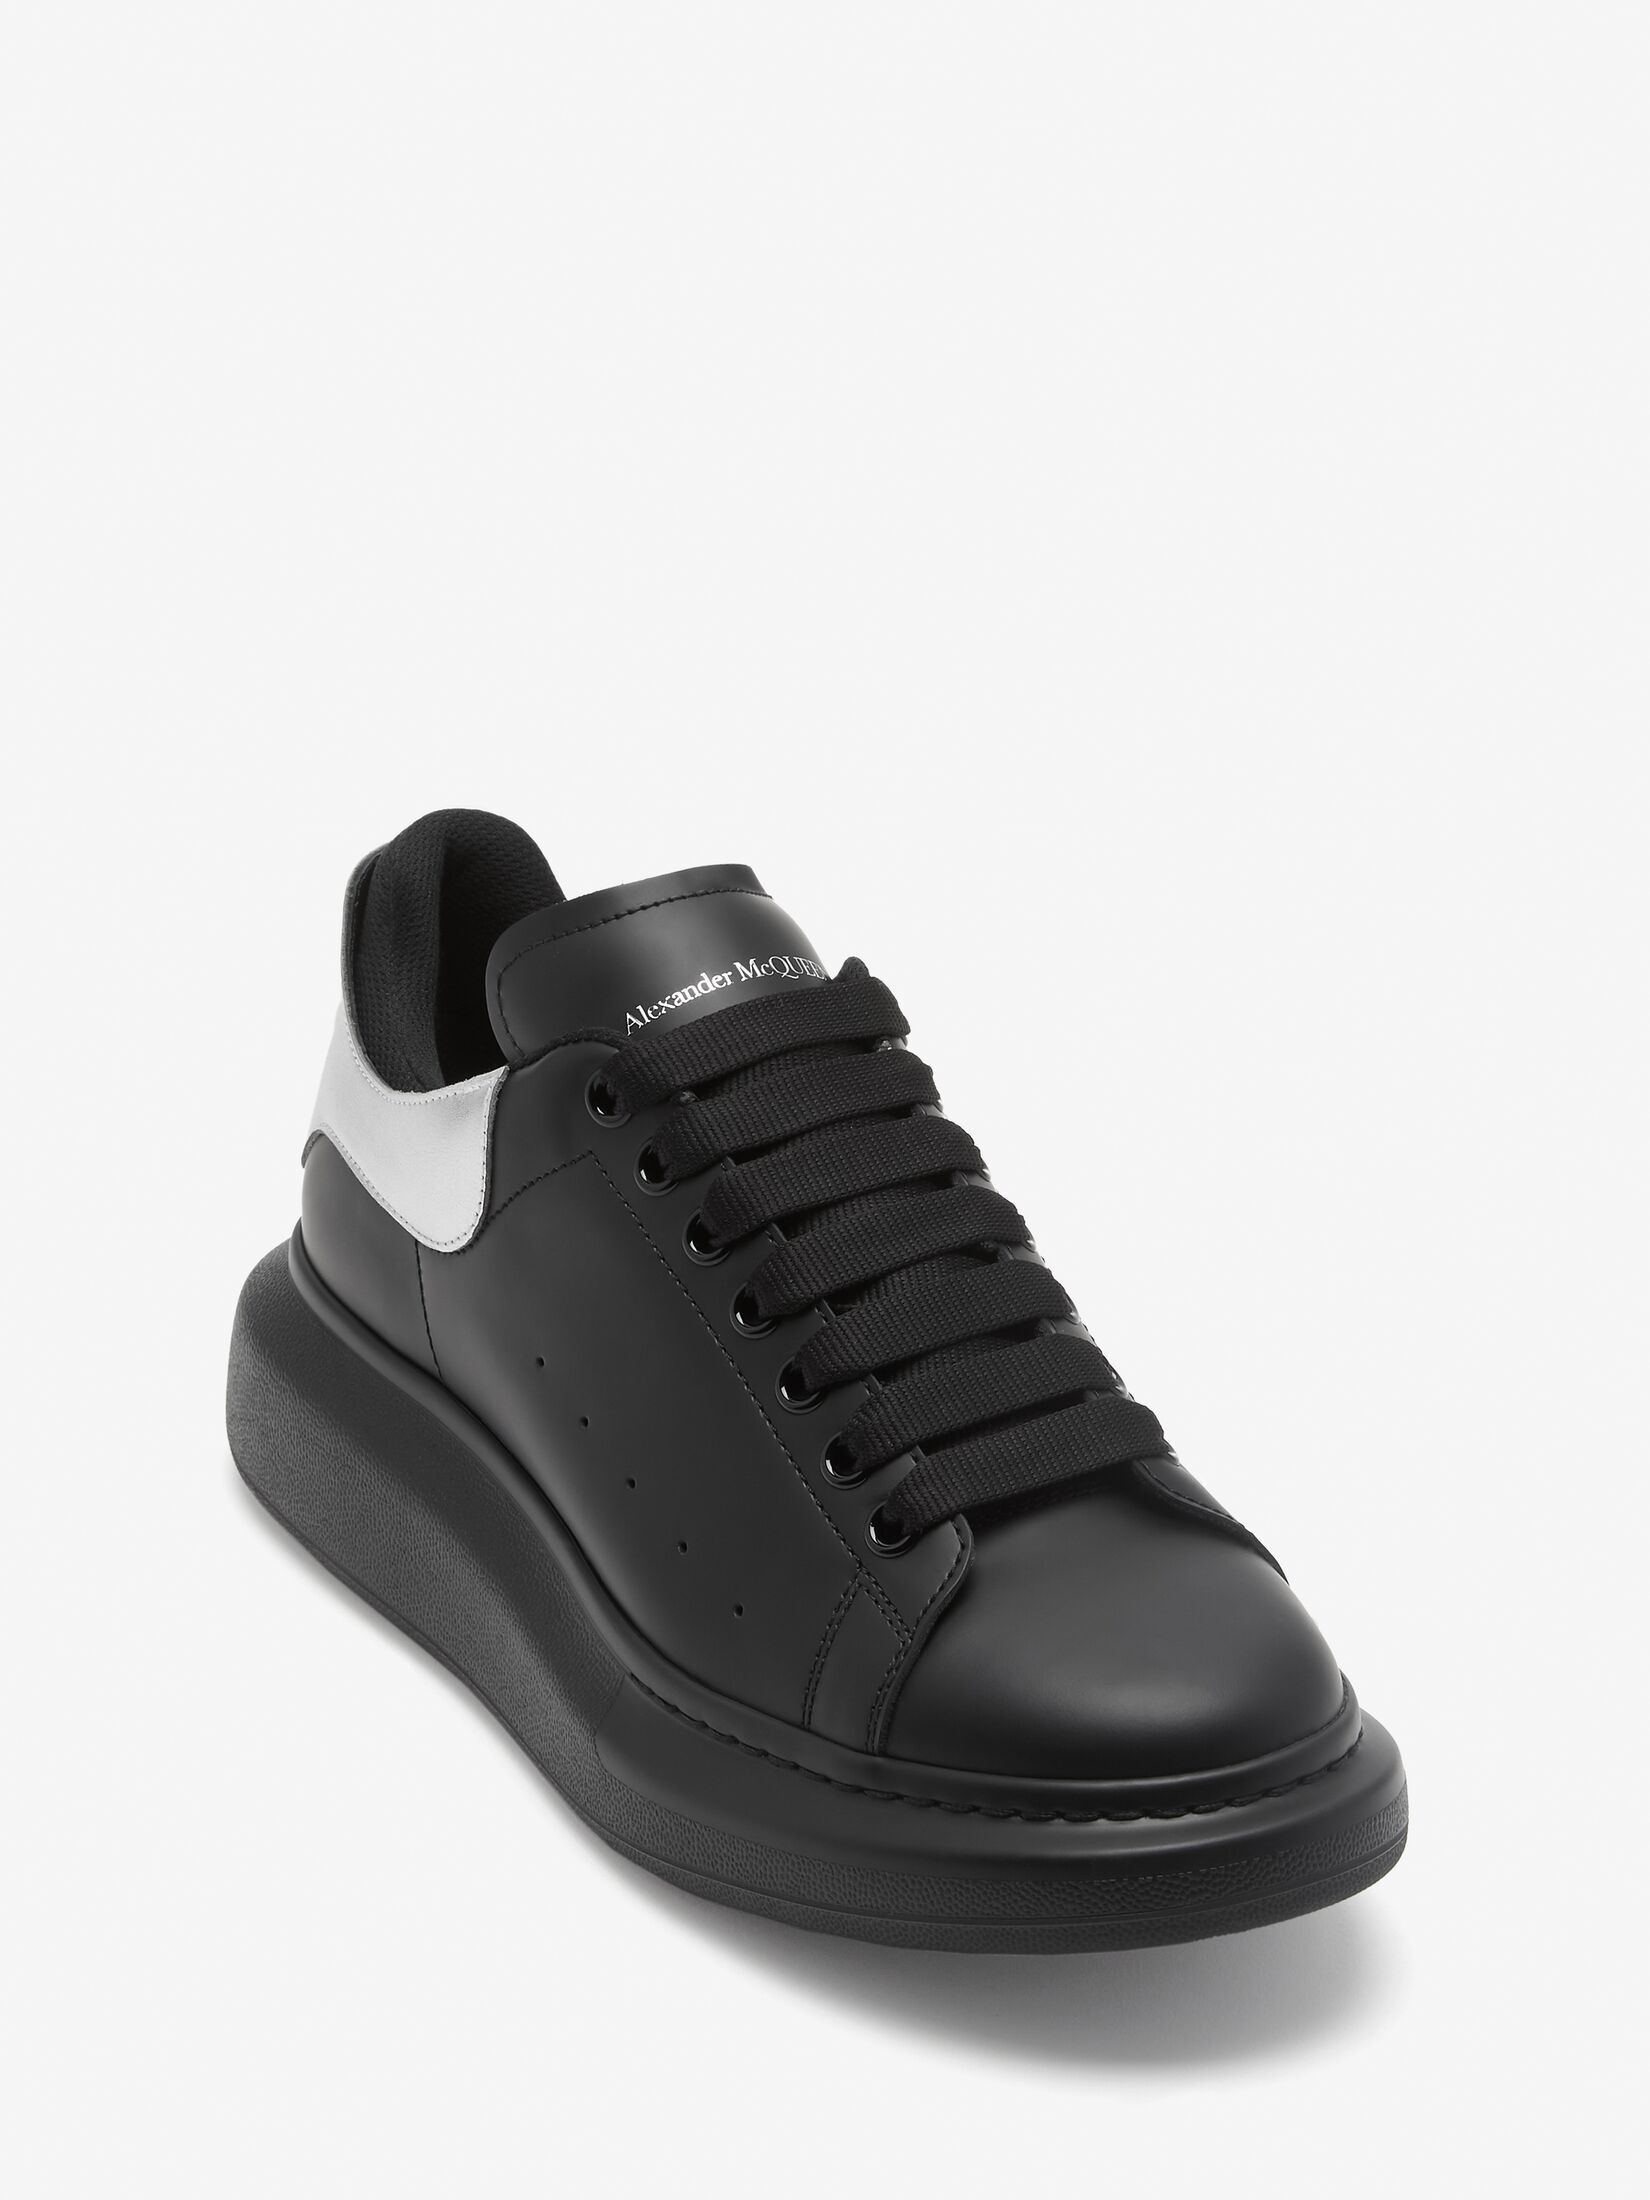 Men's Oversized Sneaker in Black/silver - 5